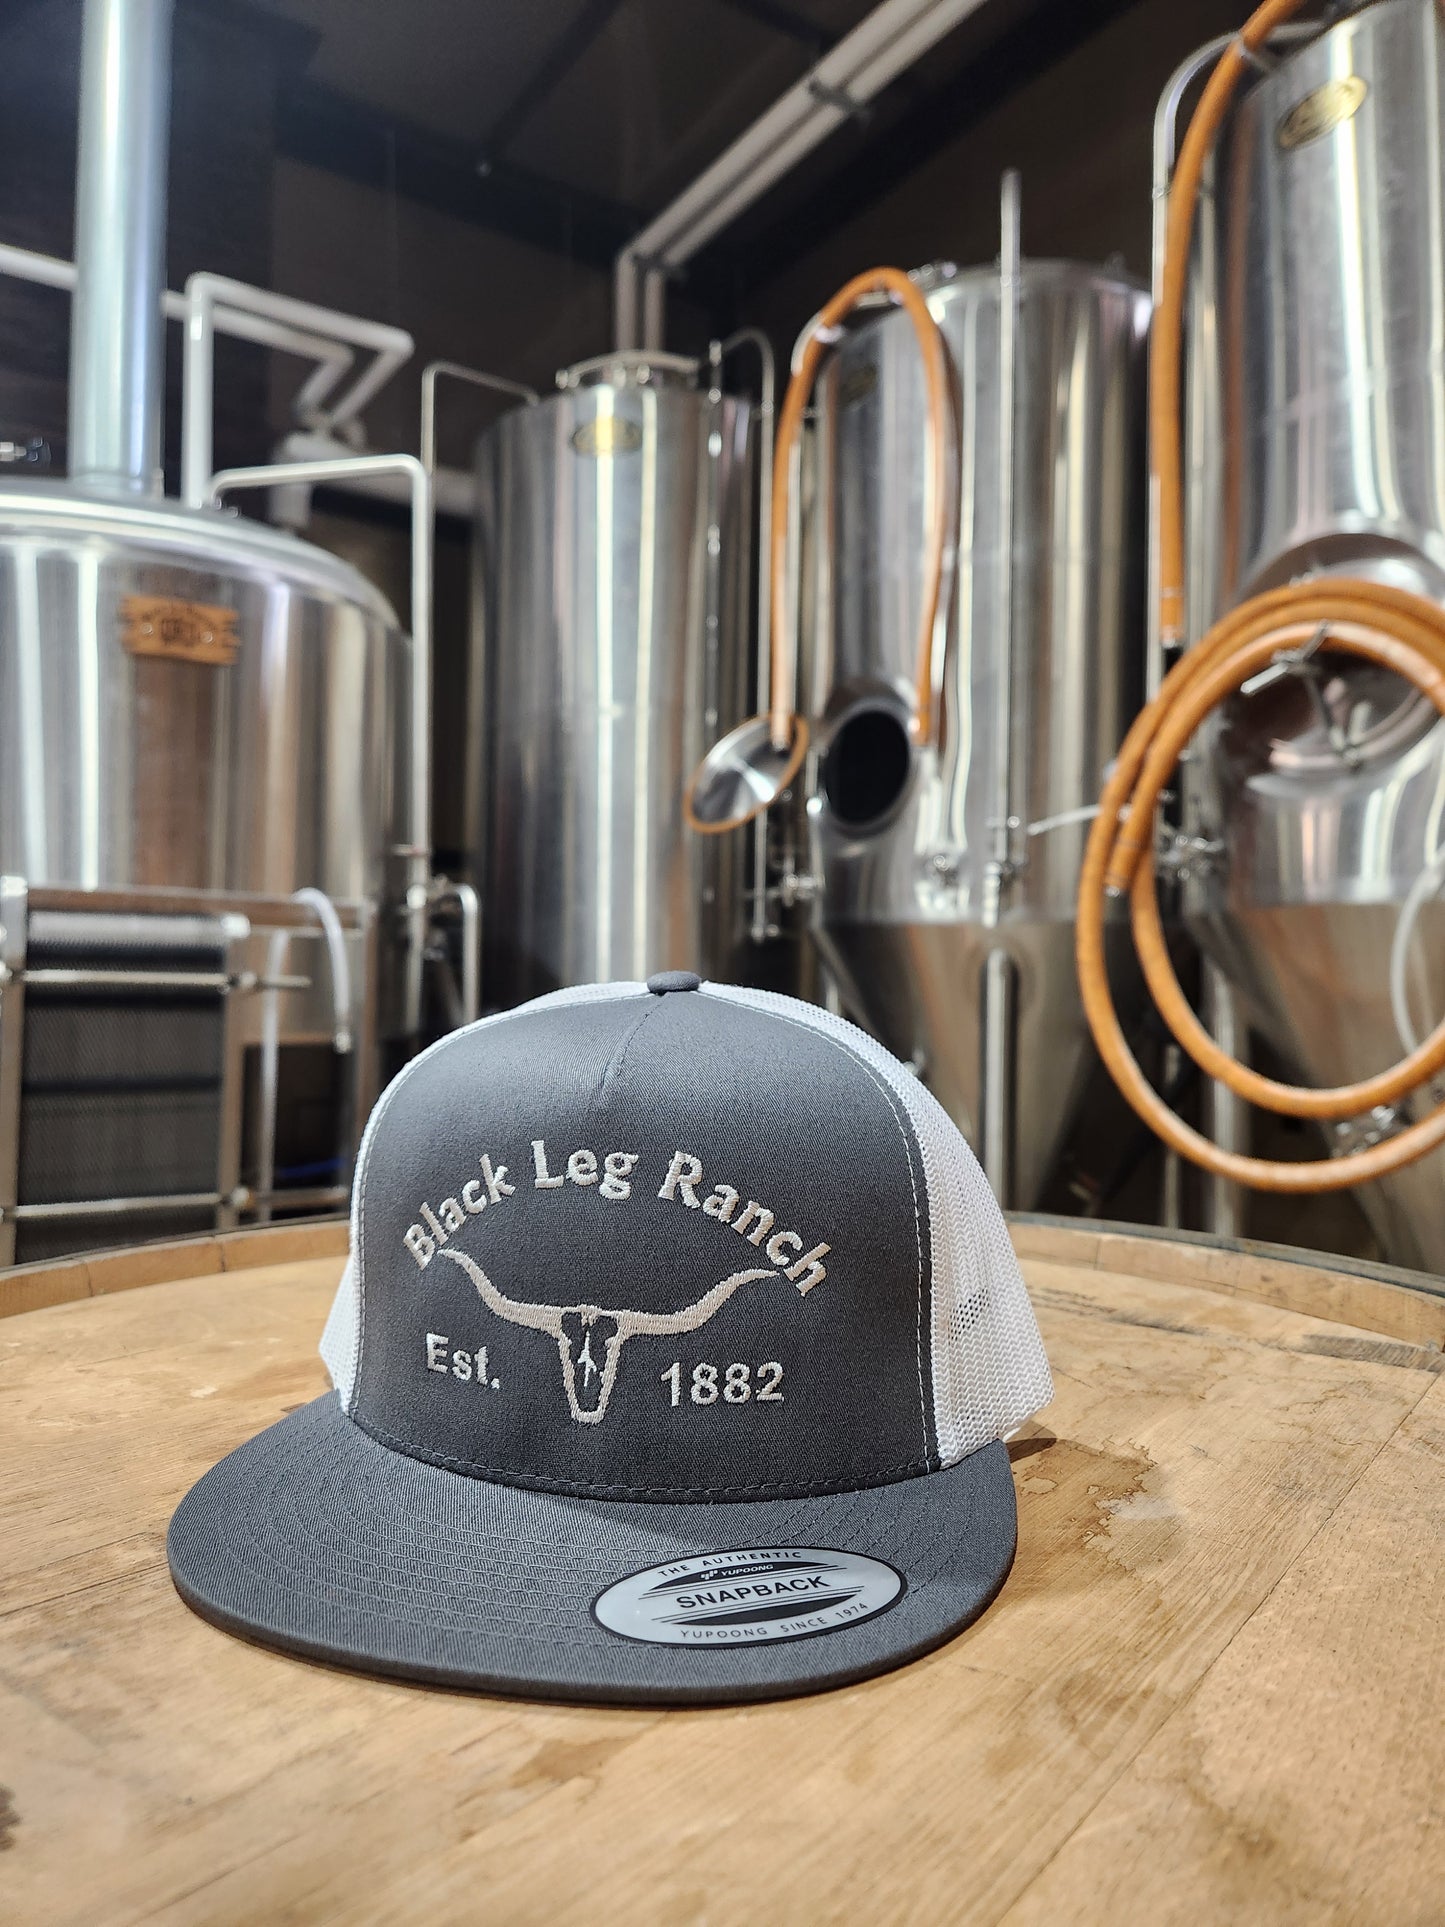 Black Leg Ranch Longhorn Hat (FREE SHIPPING)